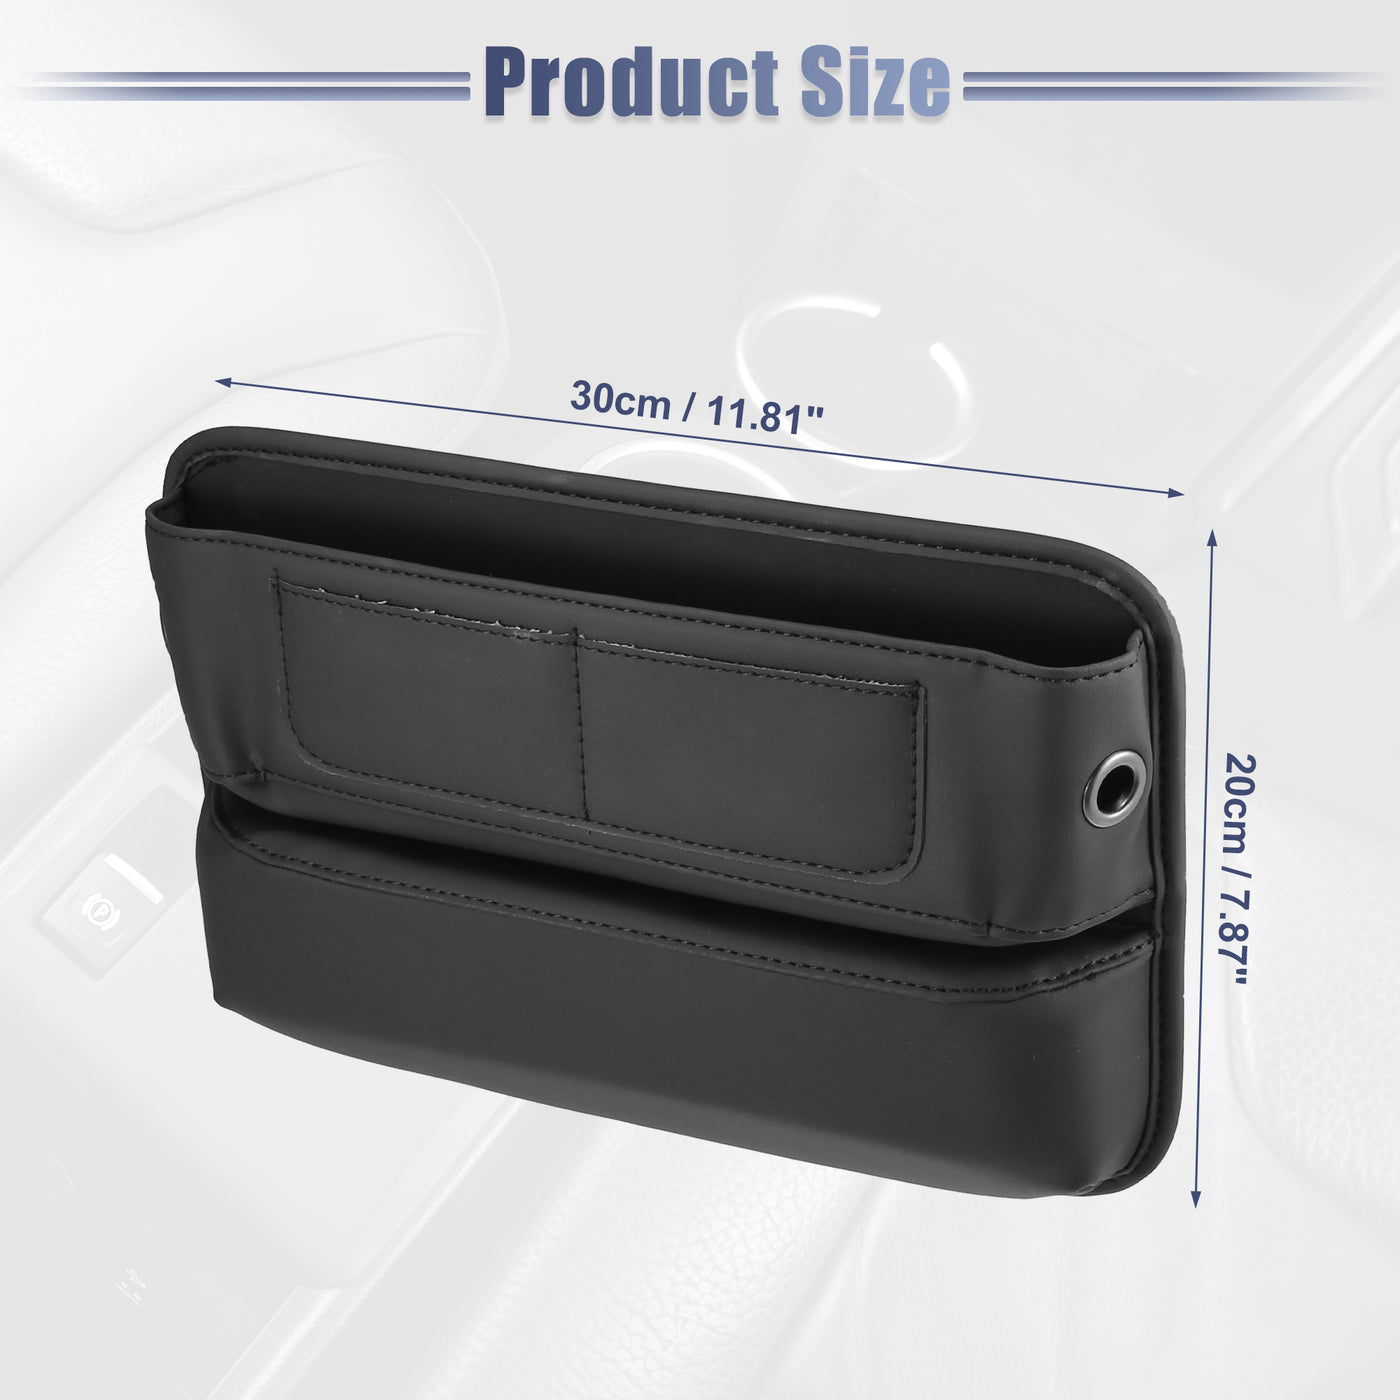 ACROPIX Black PU Leather Car Seat Gap Filler Multiple Pockets Car Seat Organizer Console Side Pocket Storage Box - Pack of 2